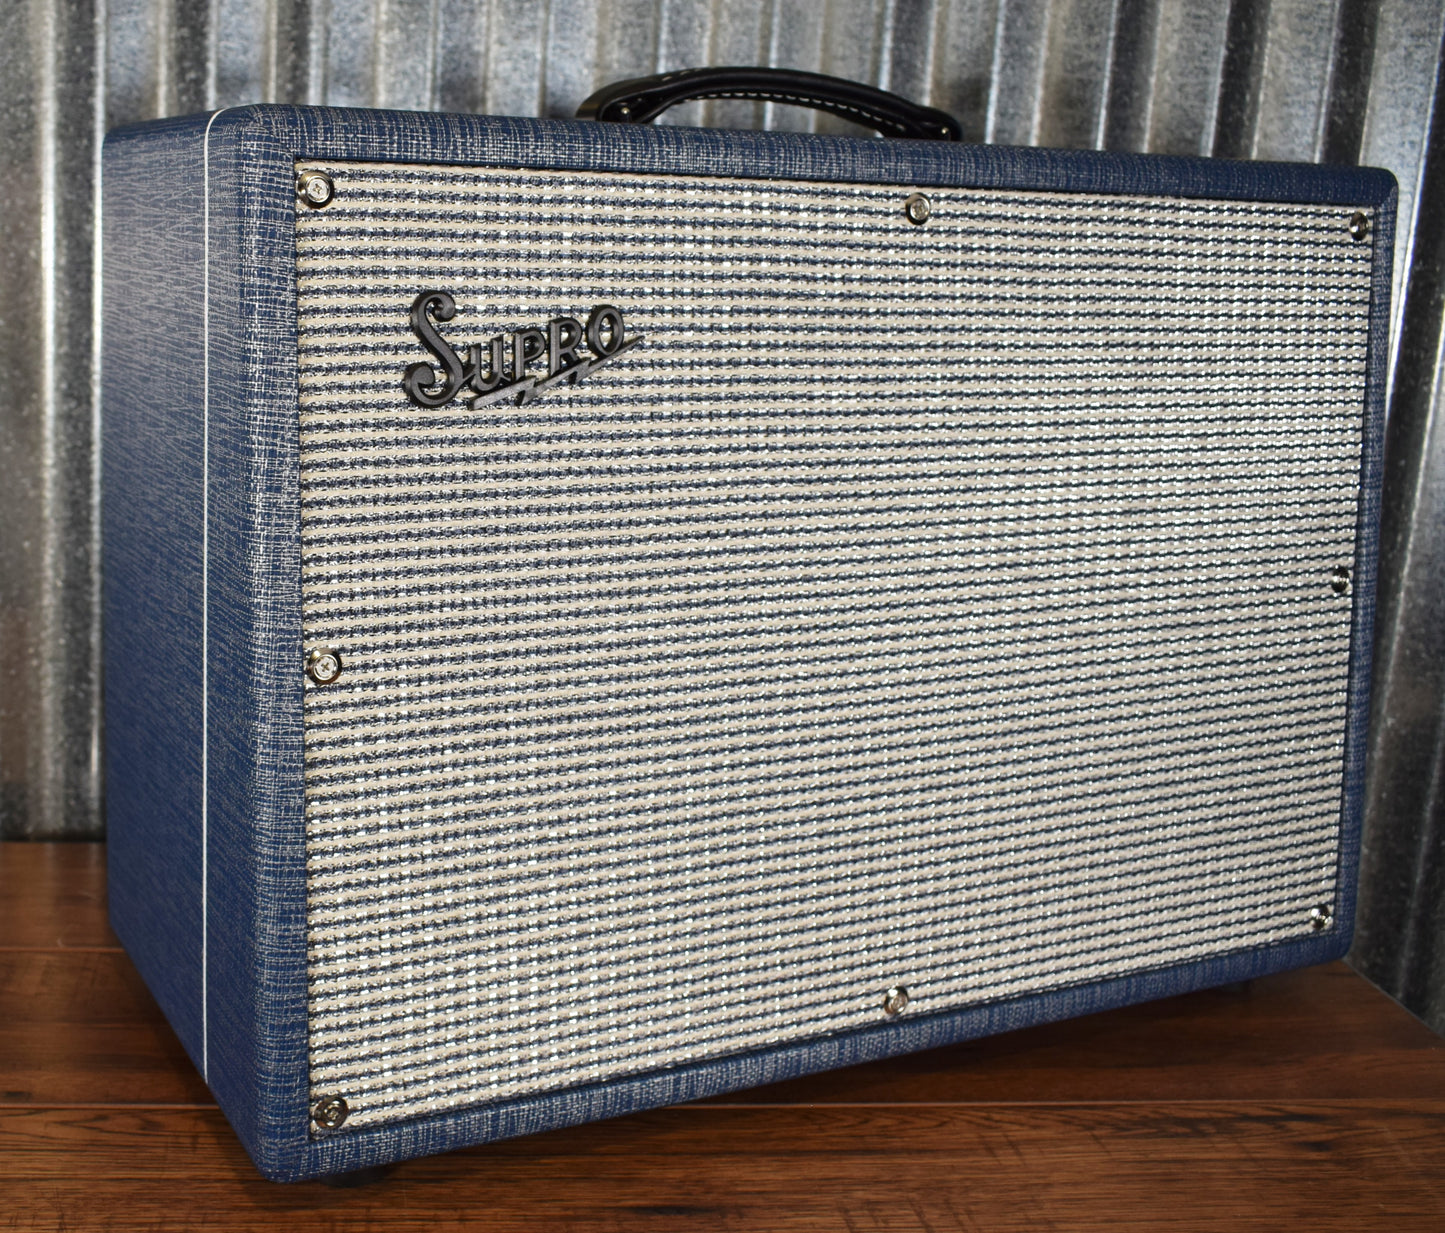 Supro 1968RK Keeley Custom 12 All Tube 25 Watt 12" Guitar Combo Amplifier